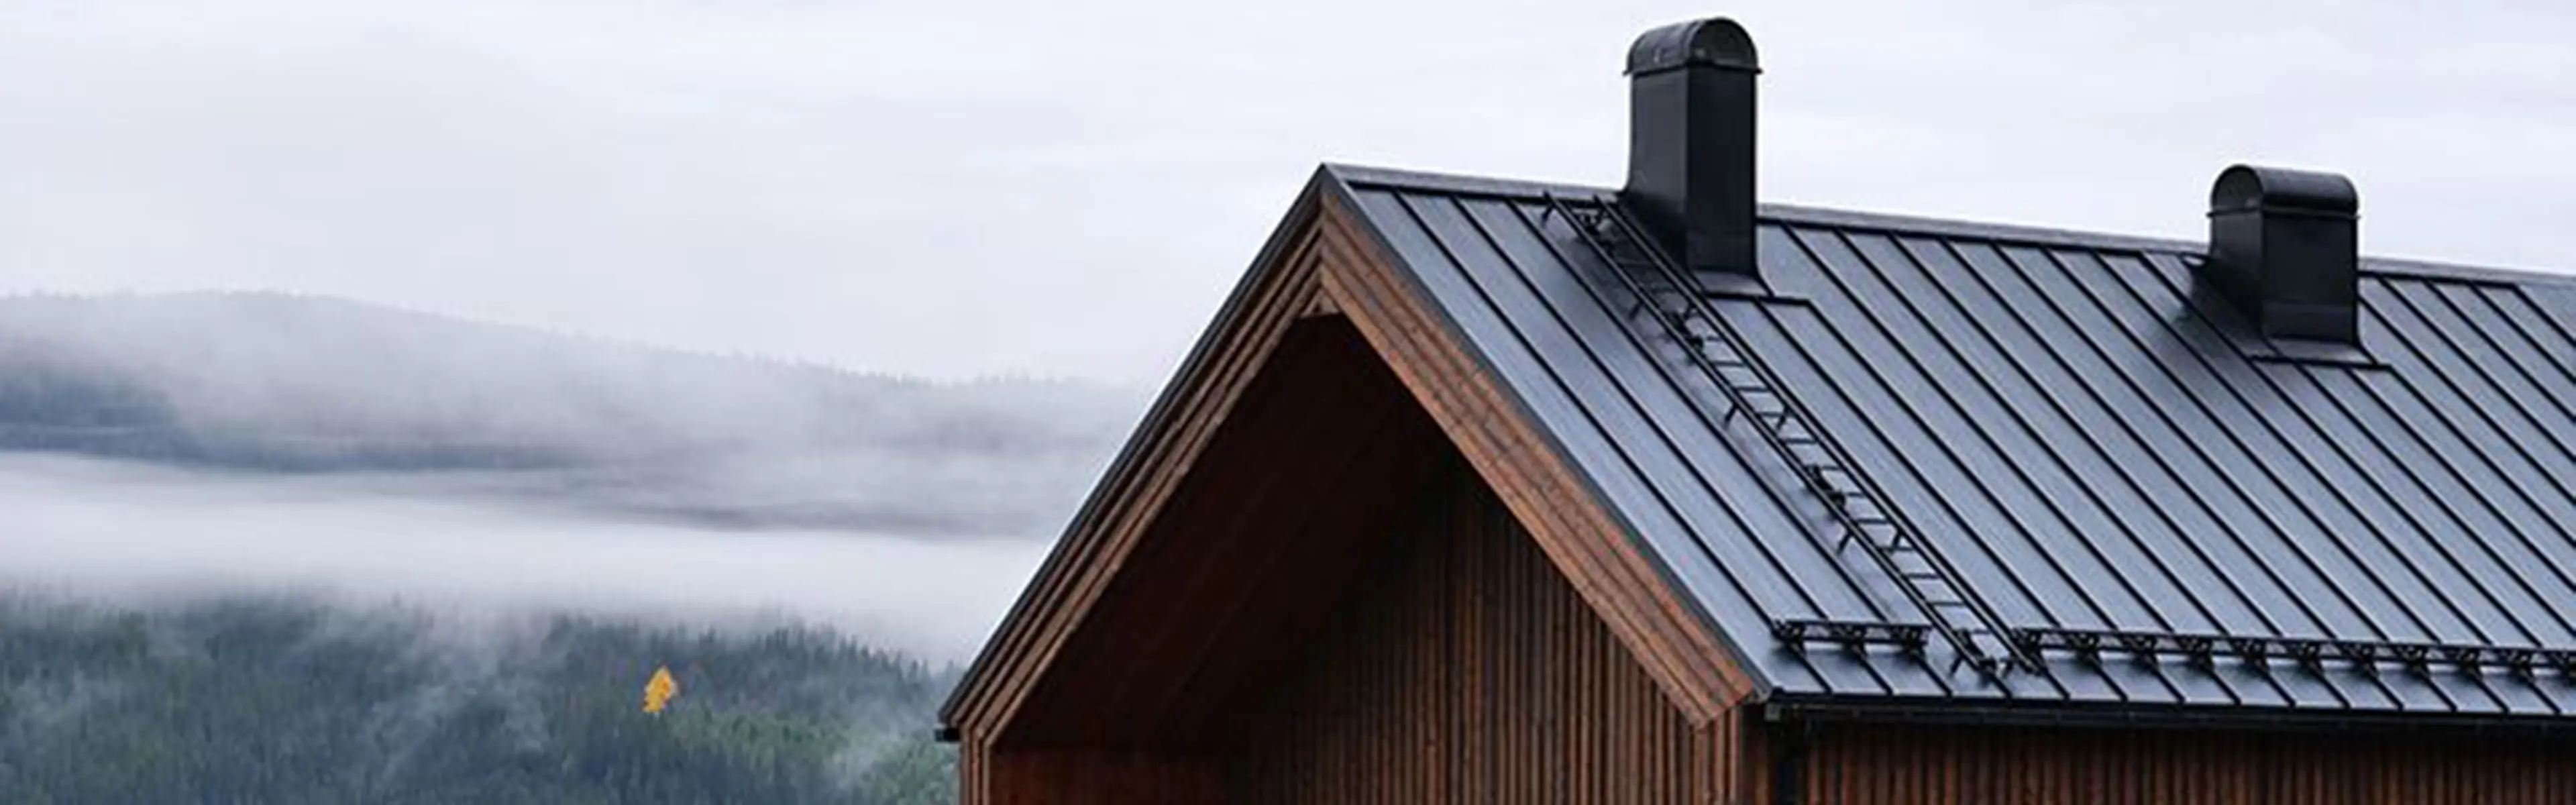 Toppen av brunt trehus med svarte takplater aluminium på taket.